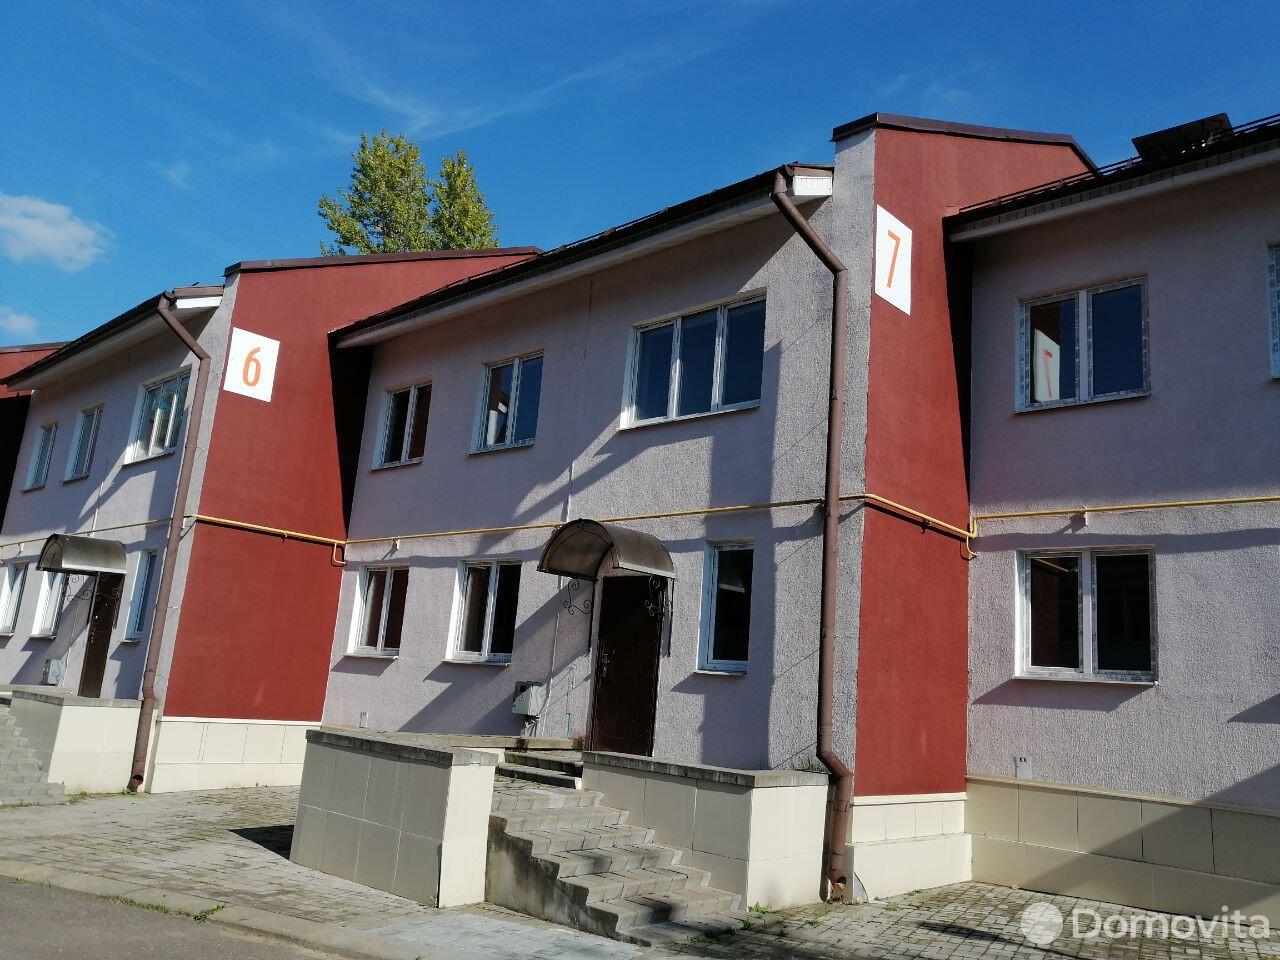 квартира, Витебск, ул. Чкалова, д. 14Д, стоимость продажи 439 357 р.